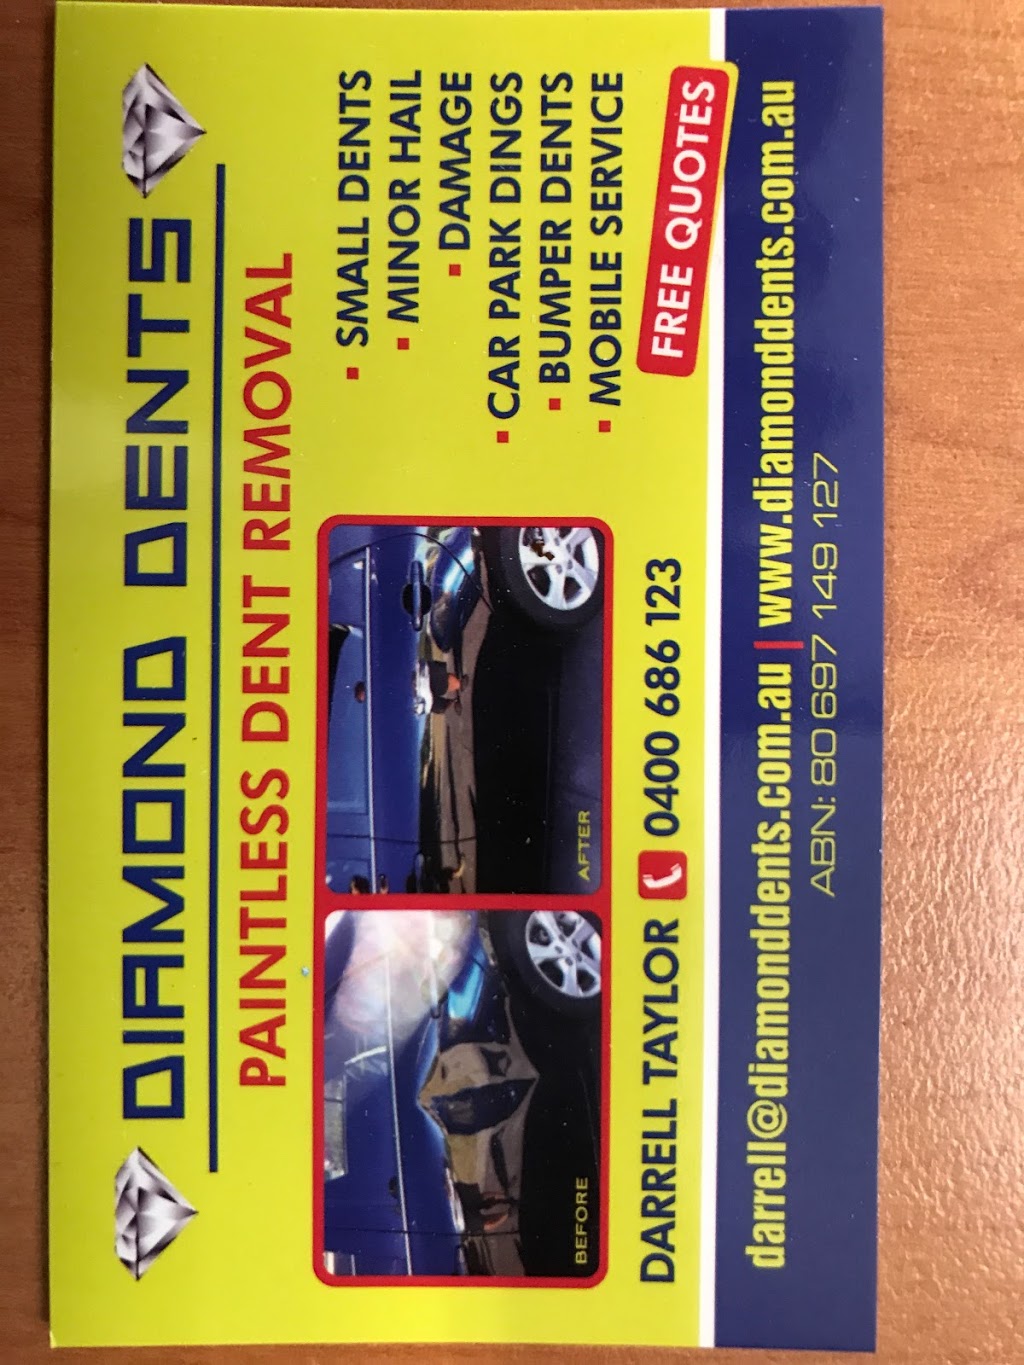 DIAMOND DENTS | car repair | 9/17 Kew St, Welshpool WA 6106, Australia | 0400686123 OR +61 400 686 123